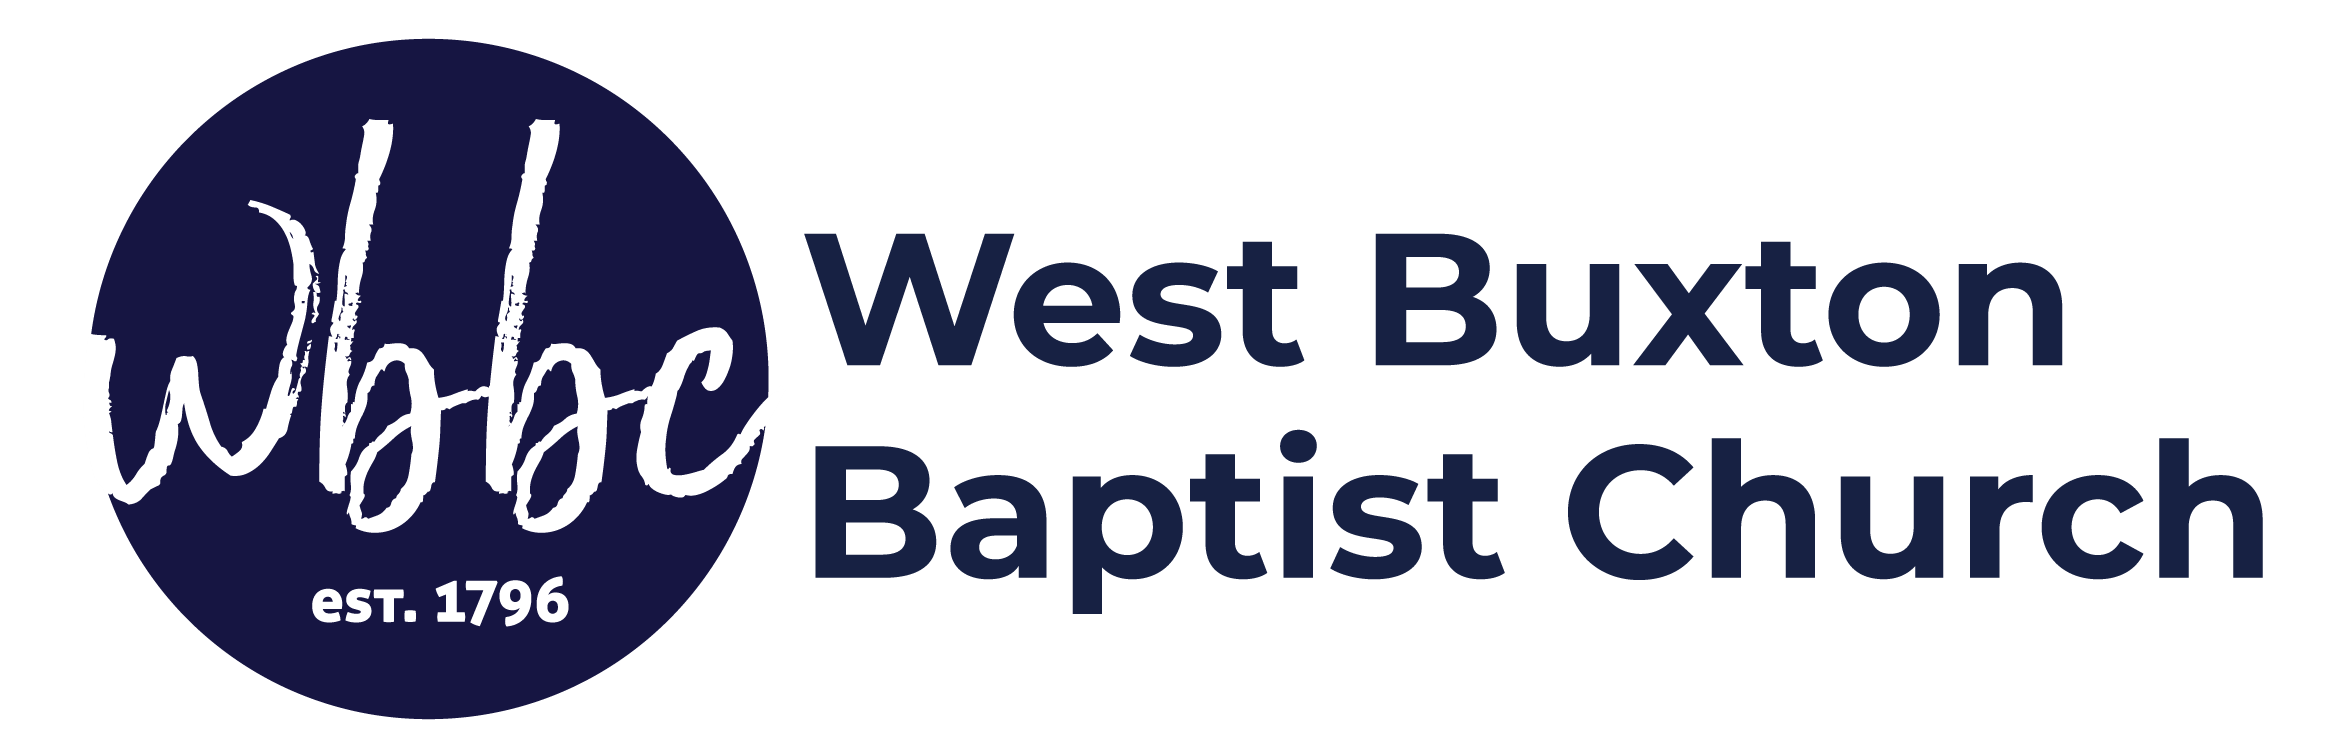 West Buxton Baptist Church Logo